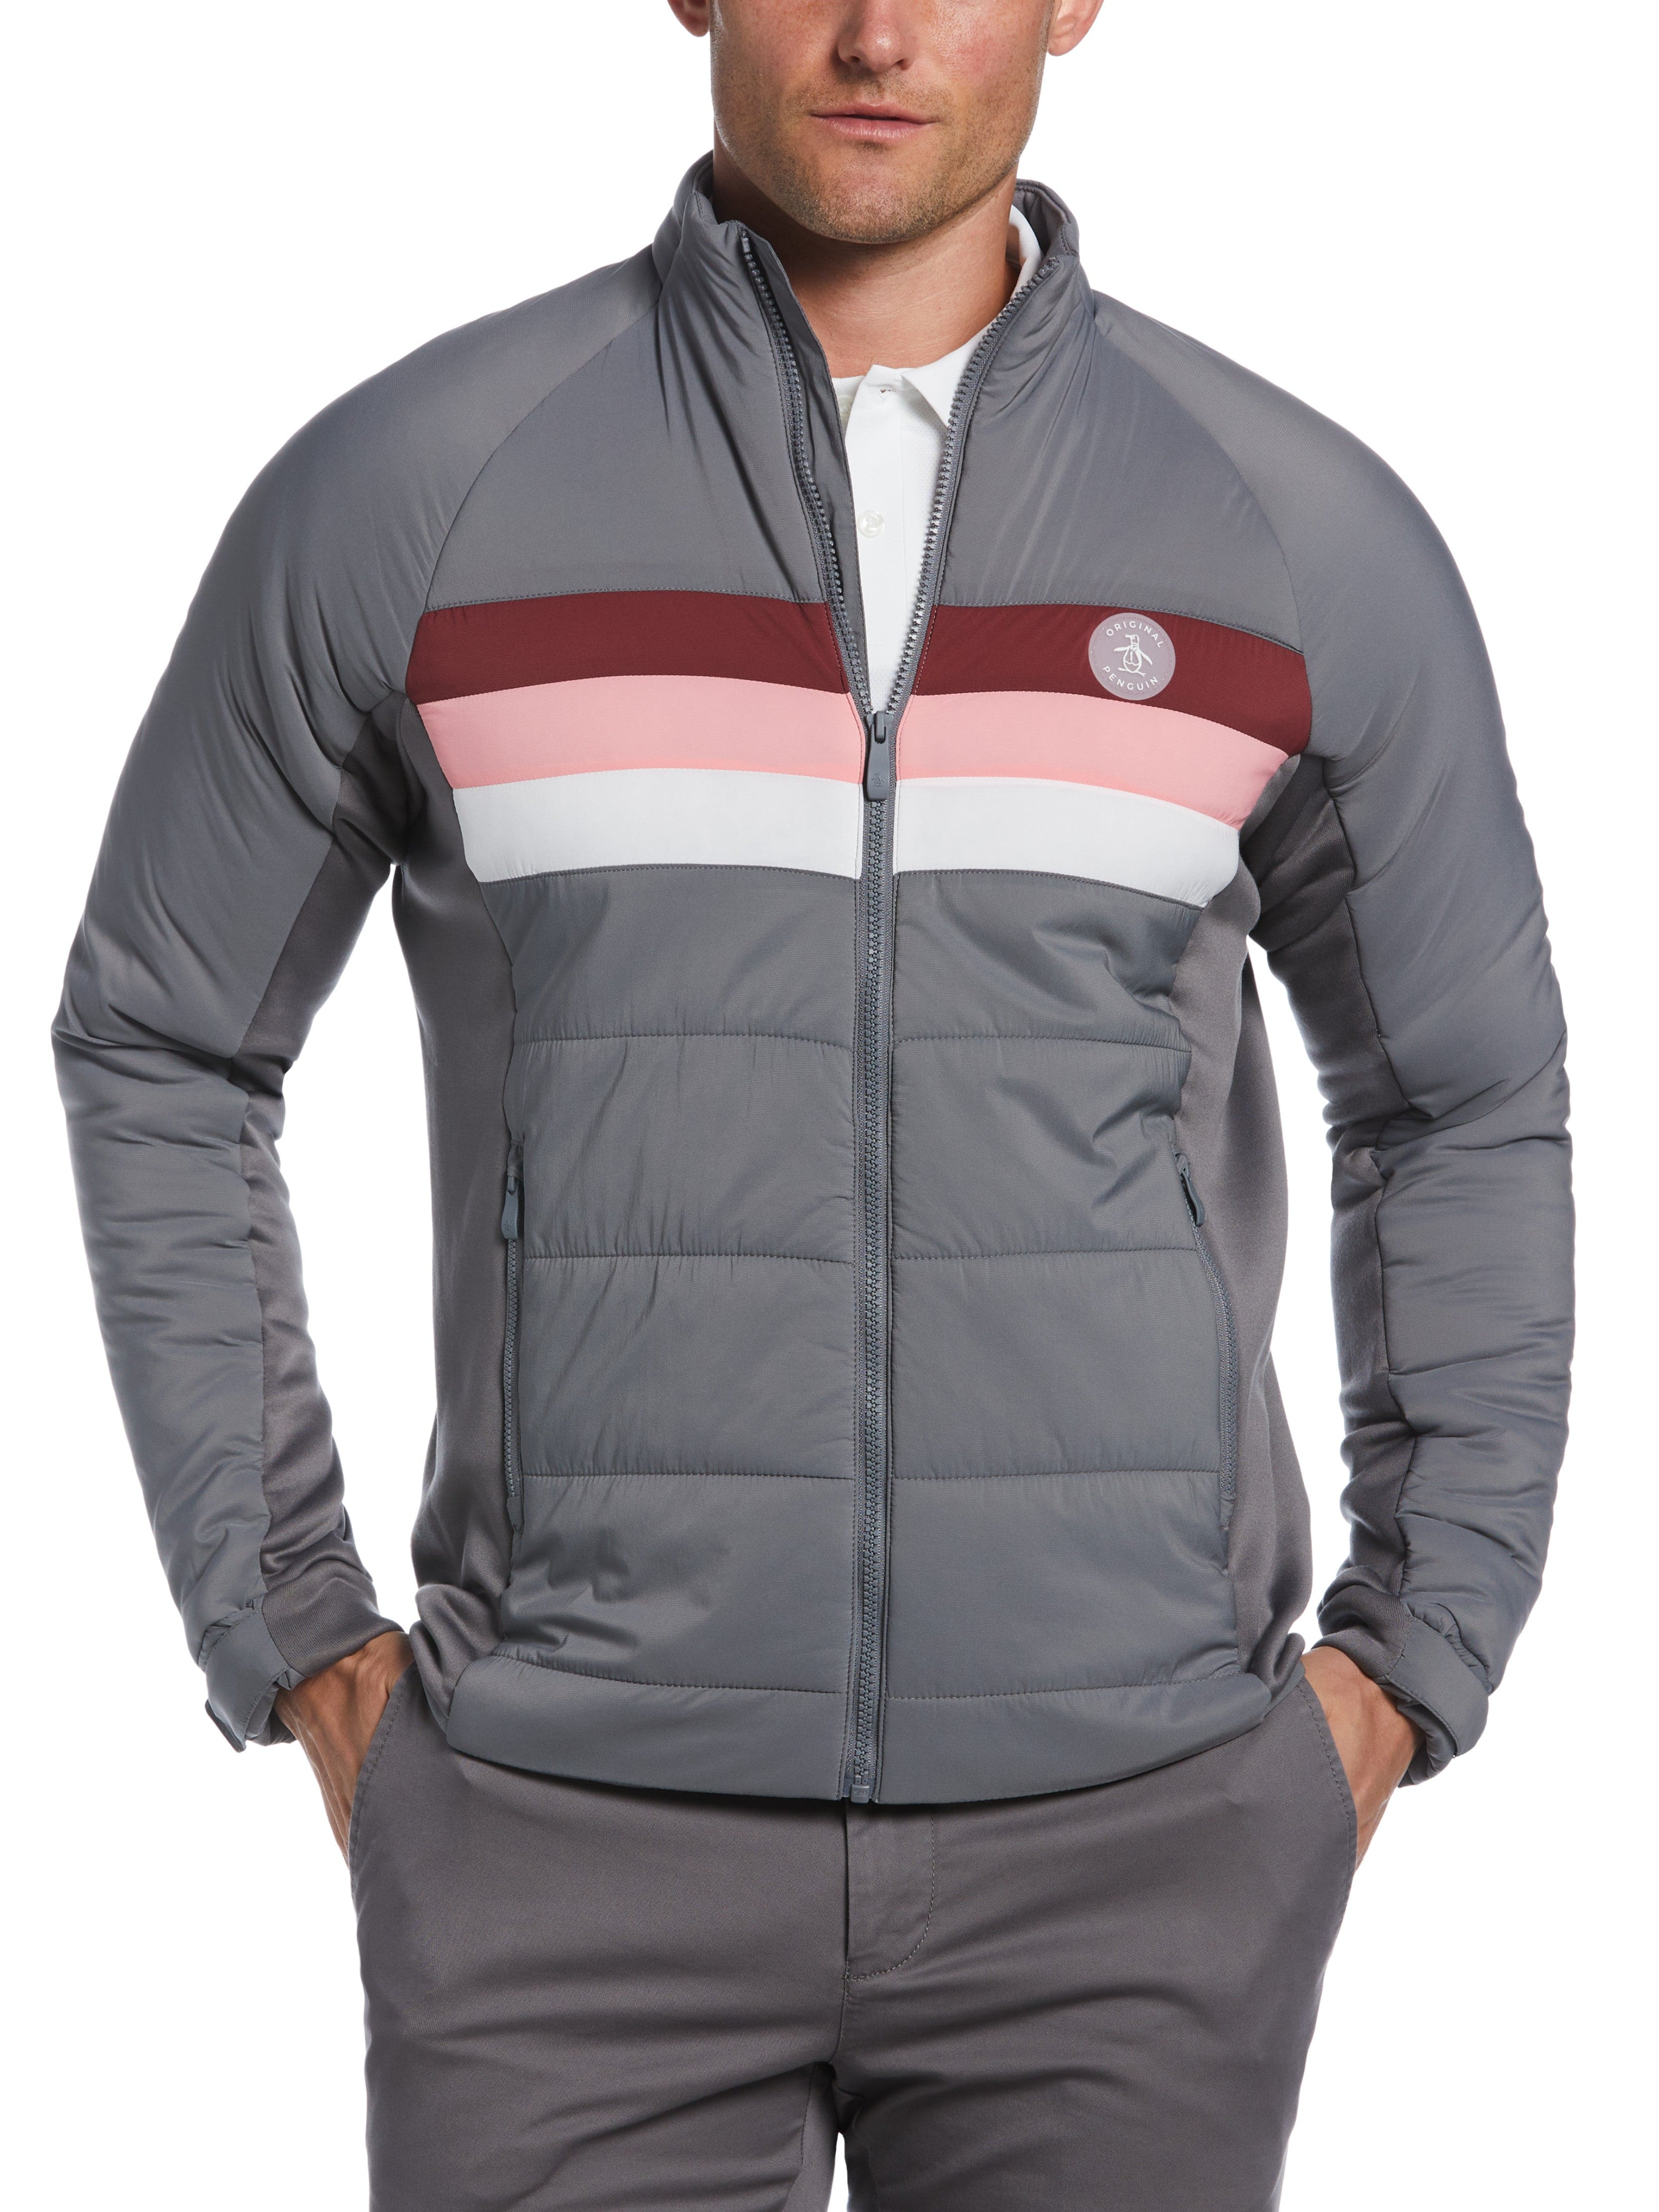 Original Penguin Mens Insulated 70s Golf Jacket Top, Size XL, Quiet Shade Gray, 100% Nylon | Golf Apparel Shop